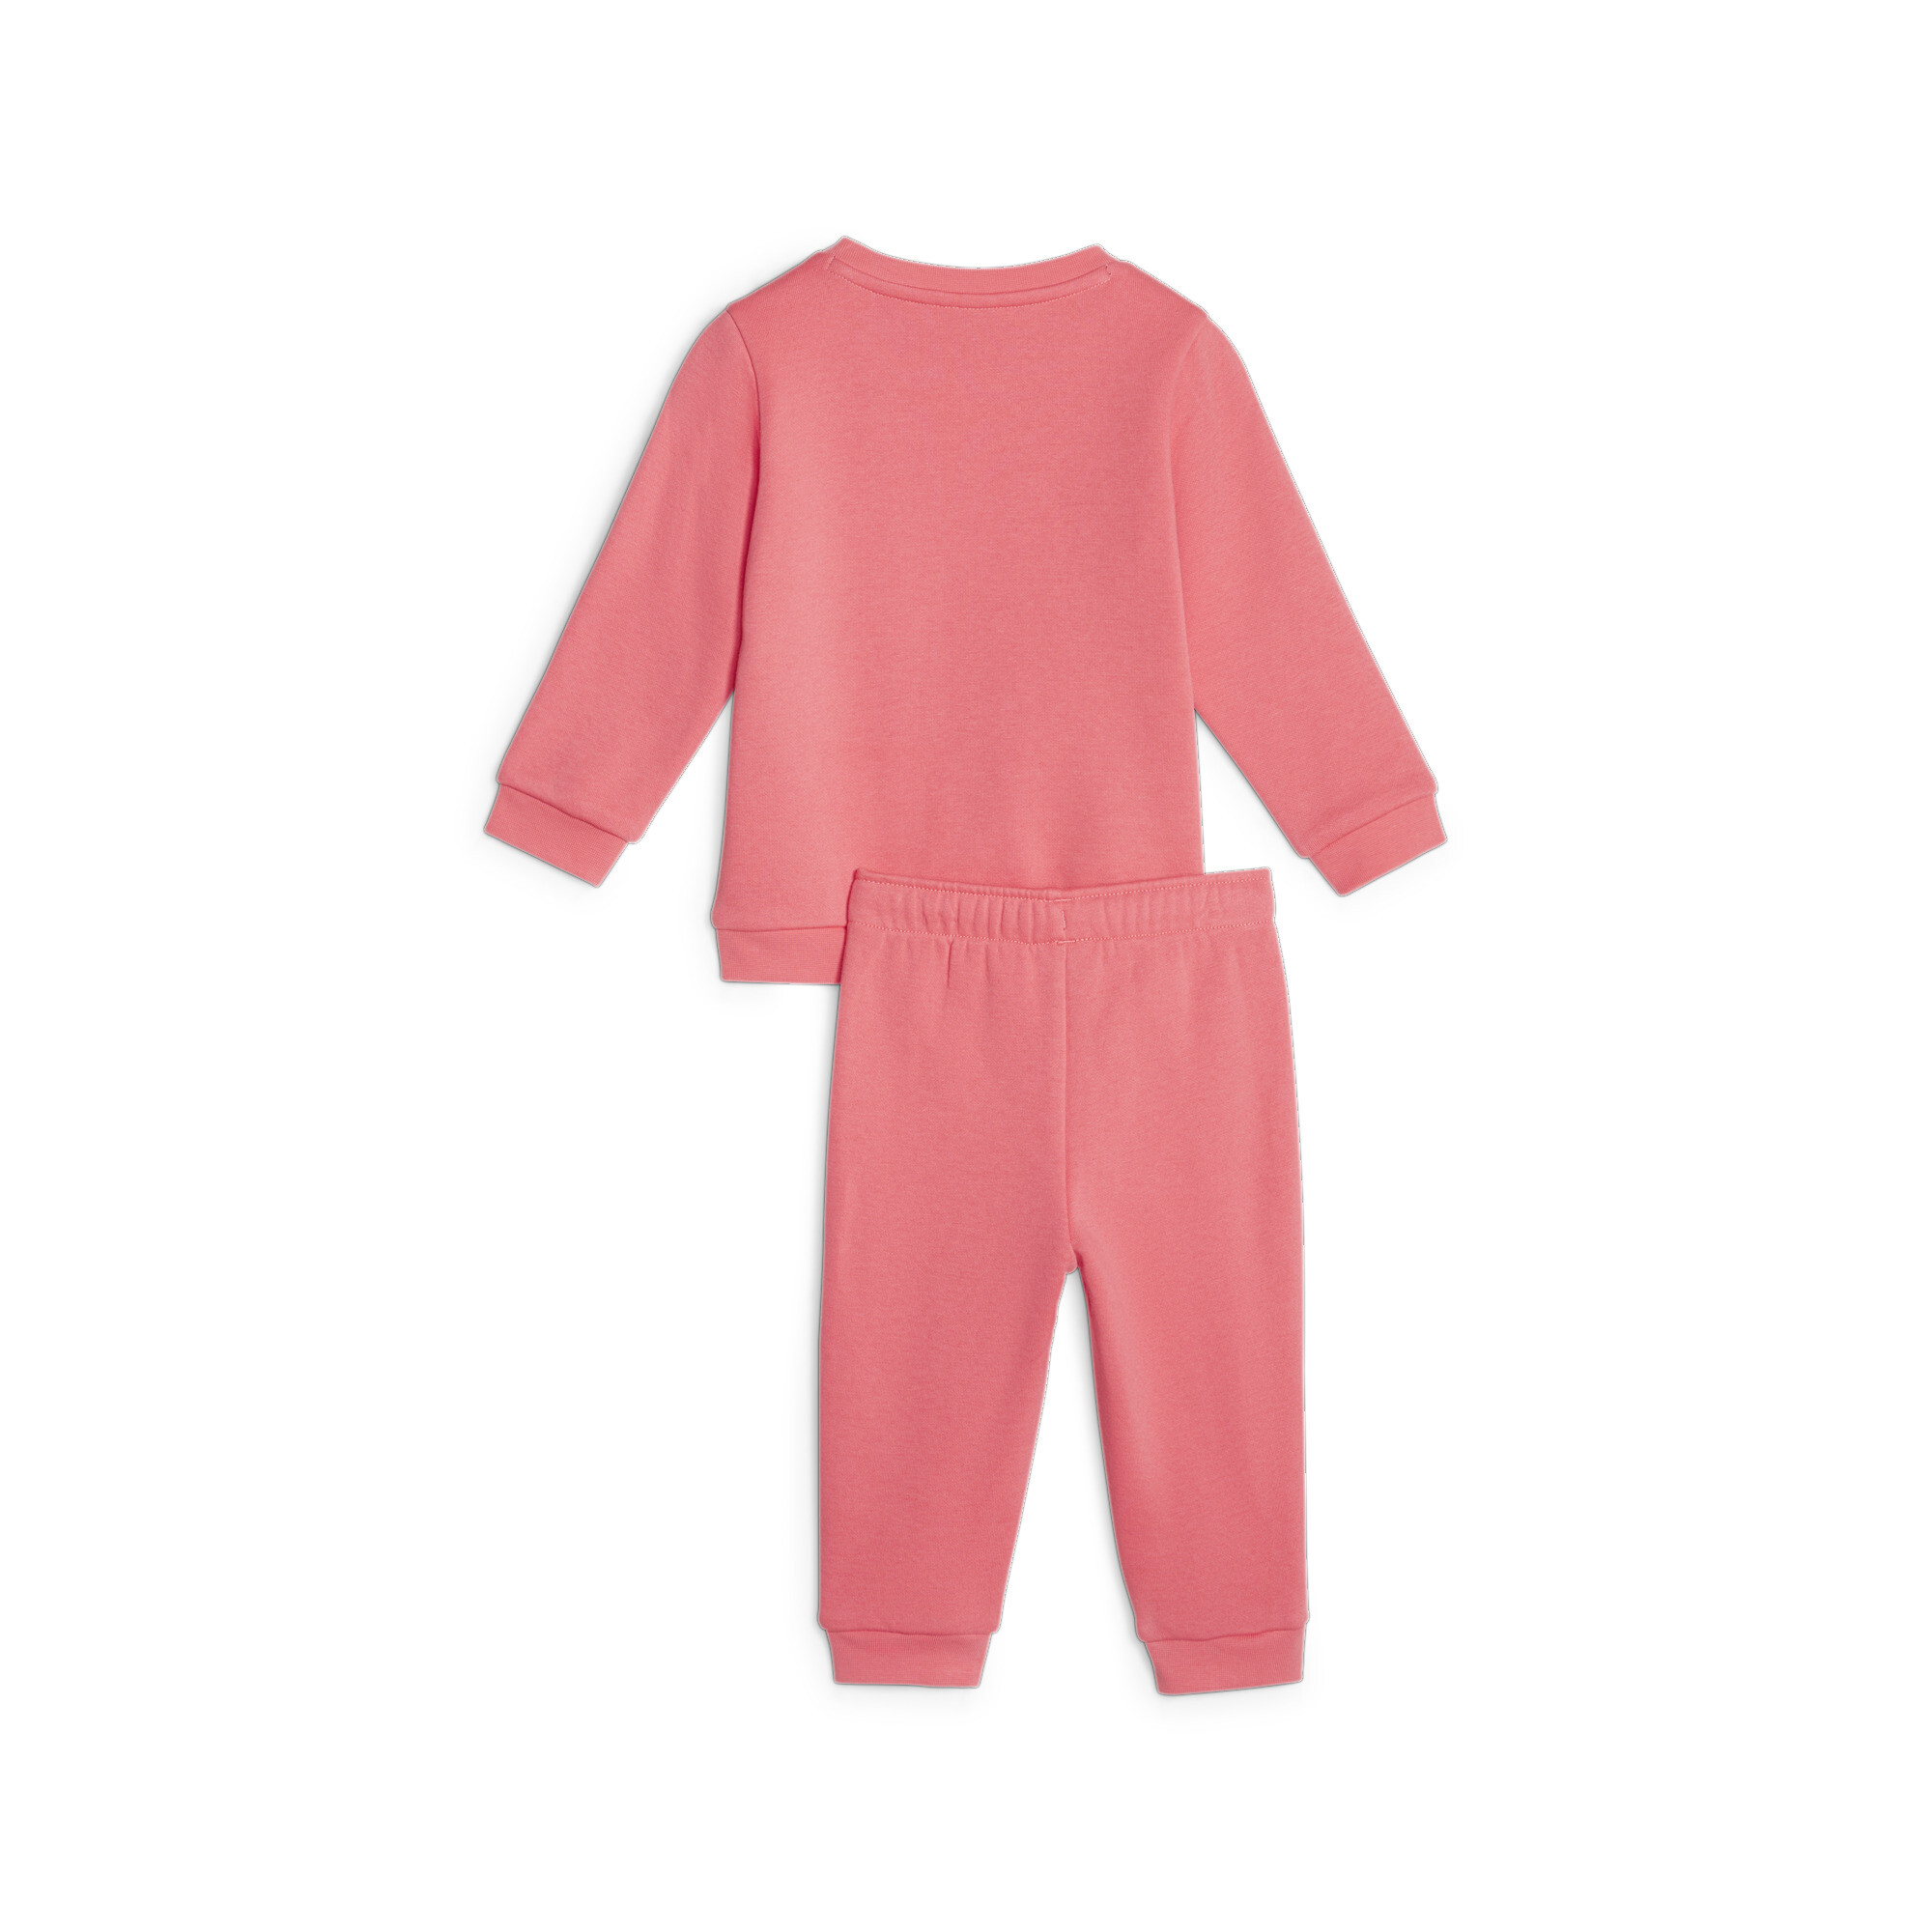 PUMA Essentials Minicats Crew Neck Babies' Jogger Suit In Pink, Size 4-6 Months